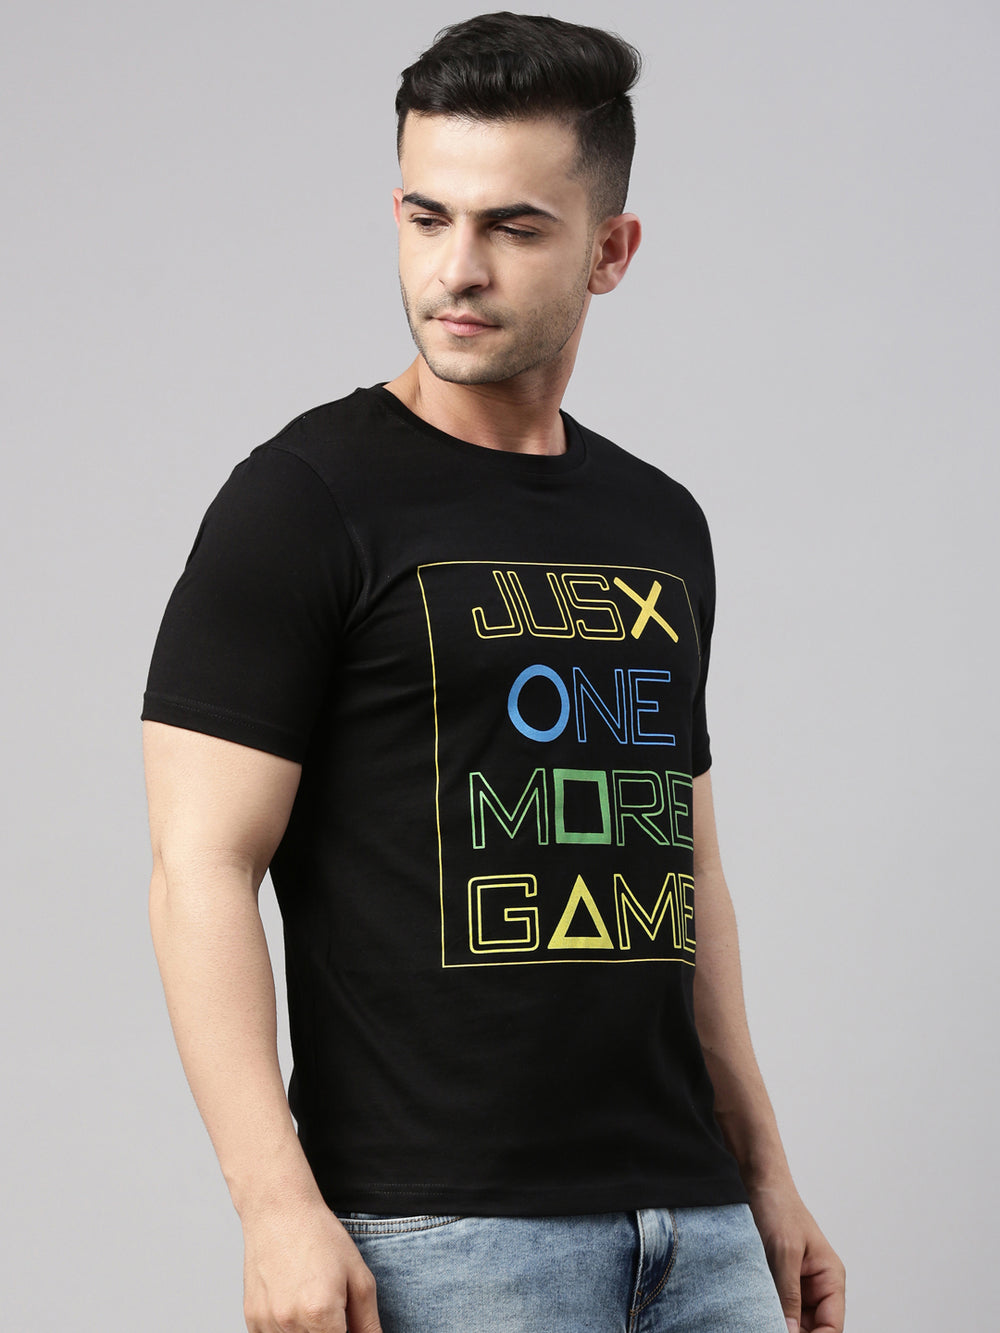 One More Game T Shirt Graphic T-Shirts Bushirt   